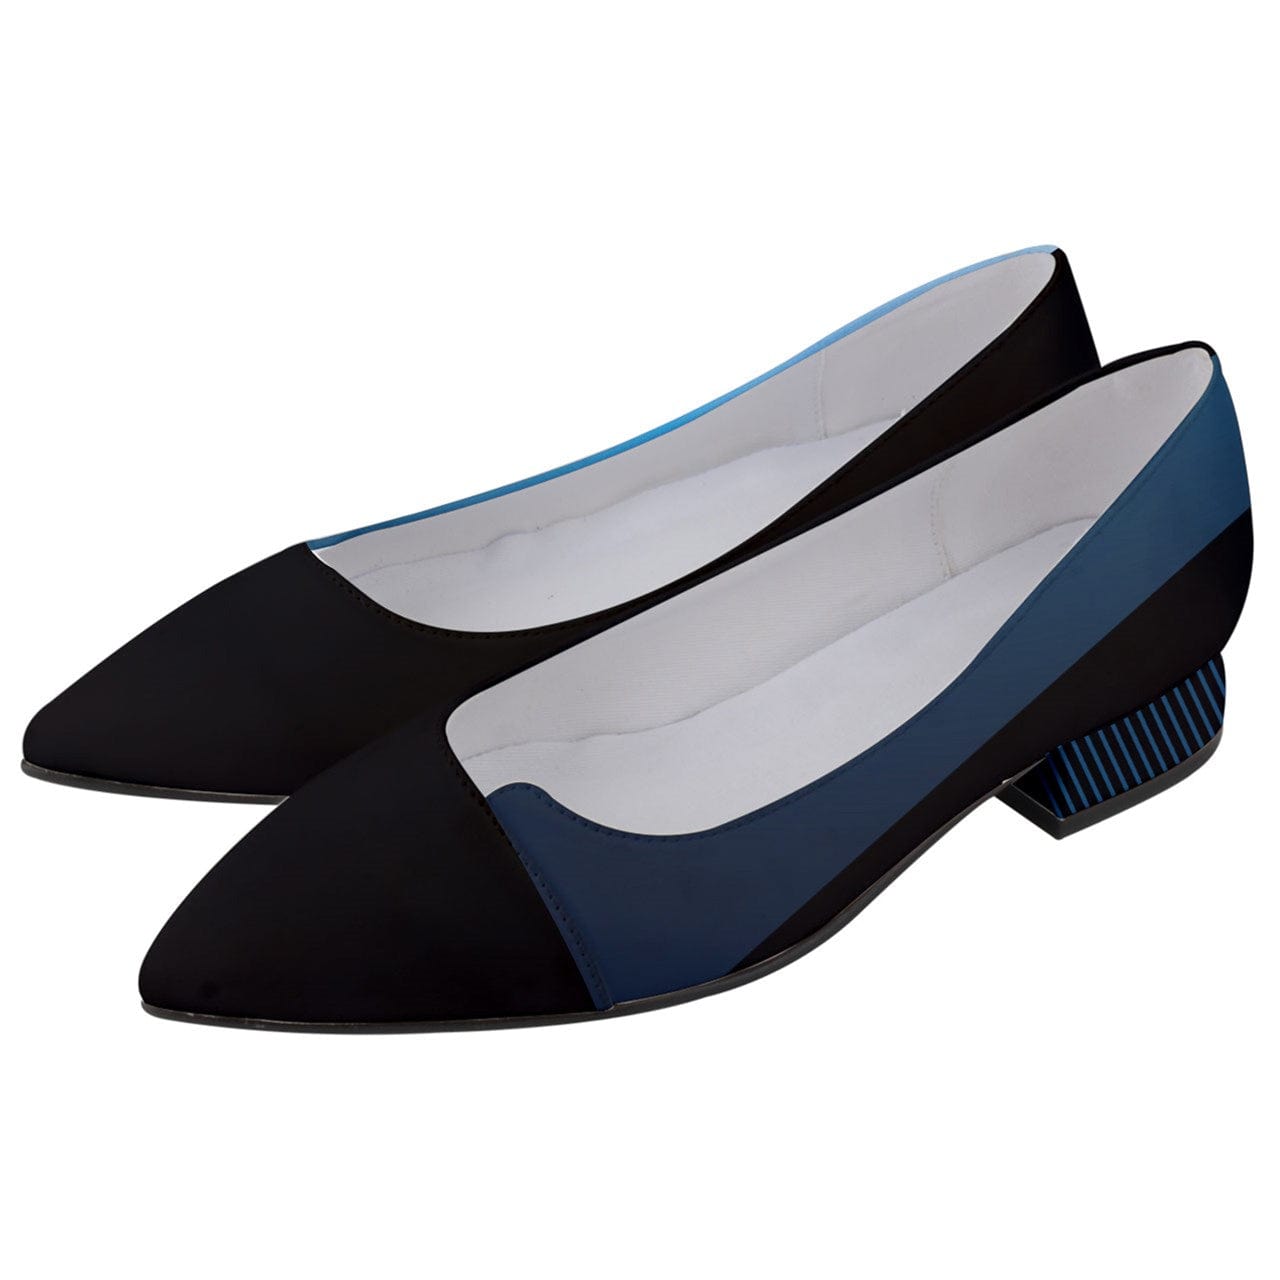 the-wheaten-store-women-s-block-heels-pointed-ballerinas-heeled-sandals-33143204577477